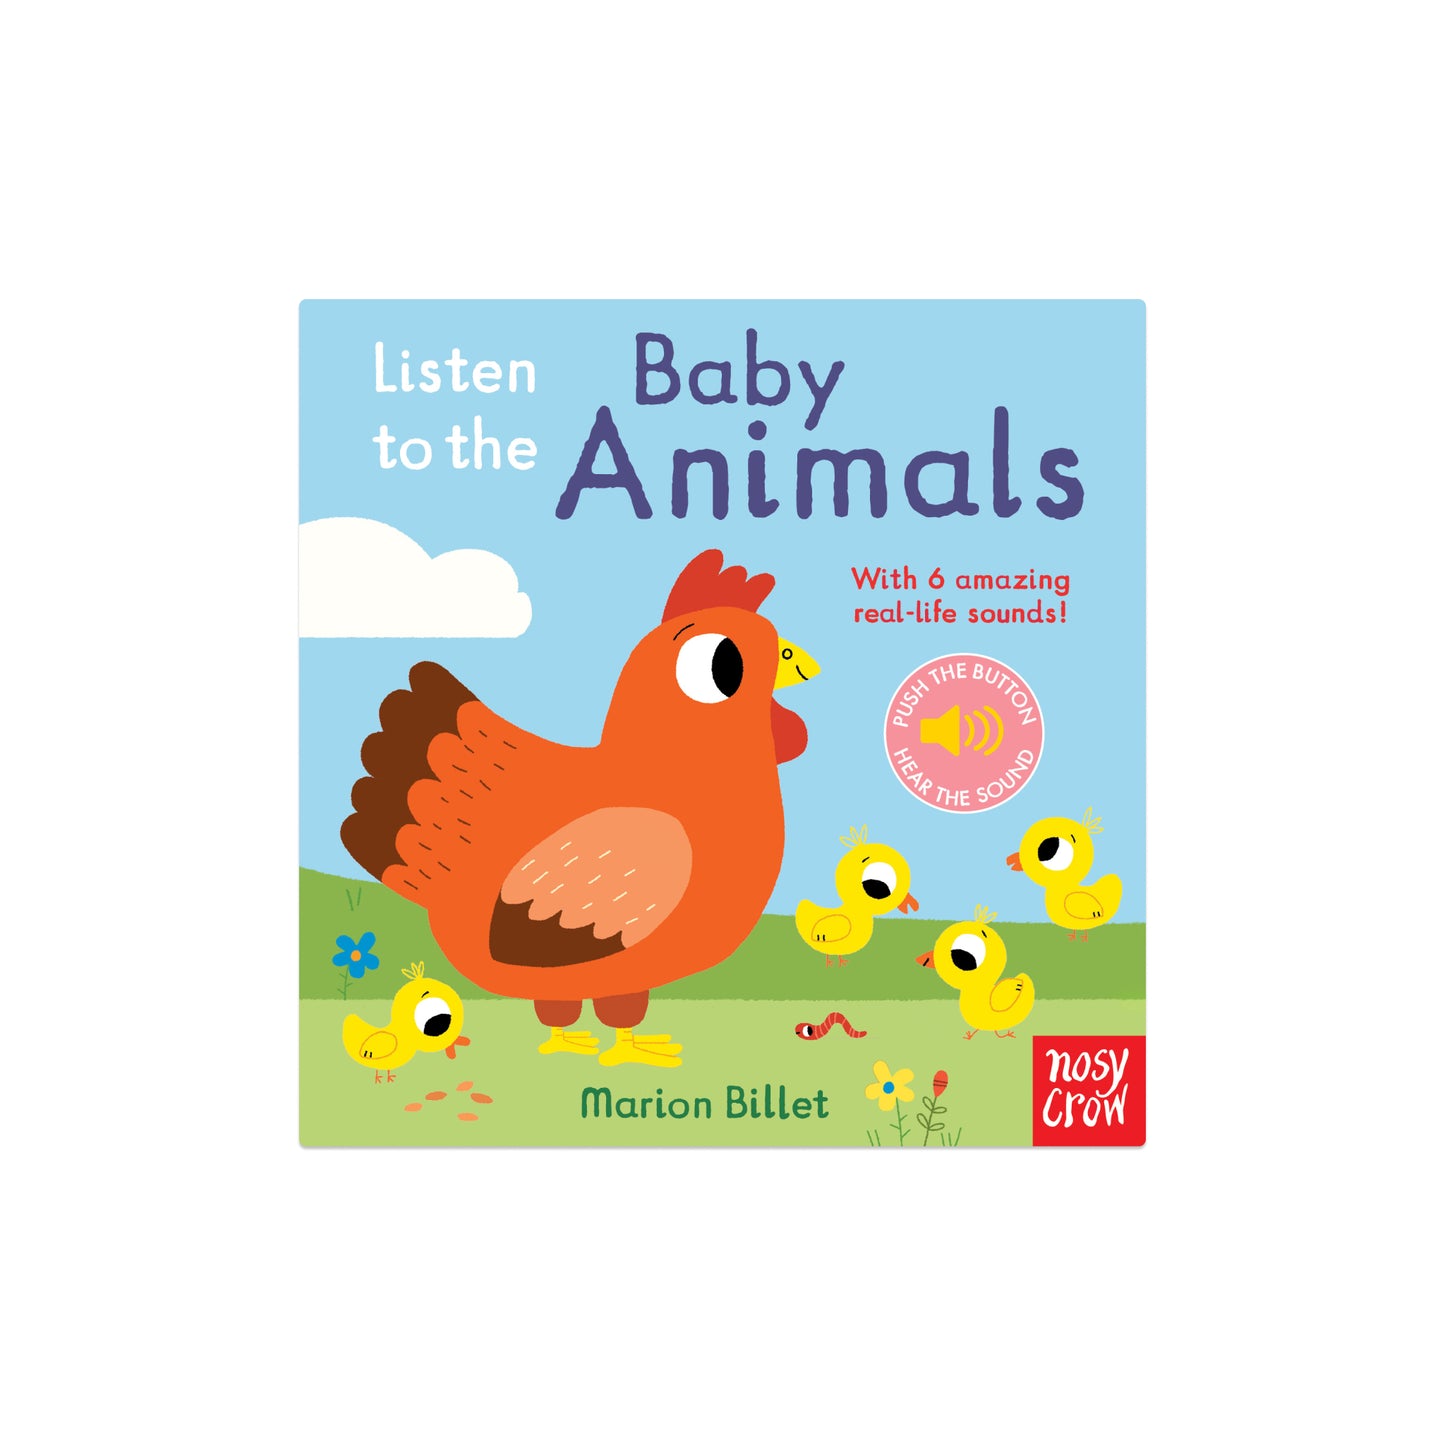 Listen to the Baby Animals